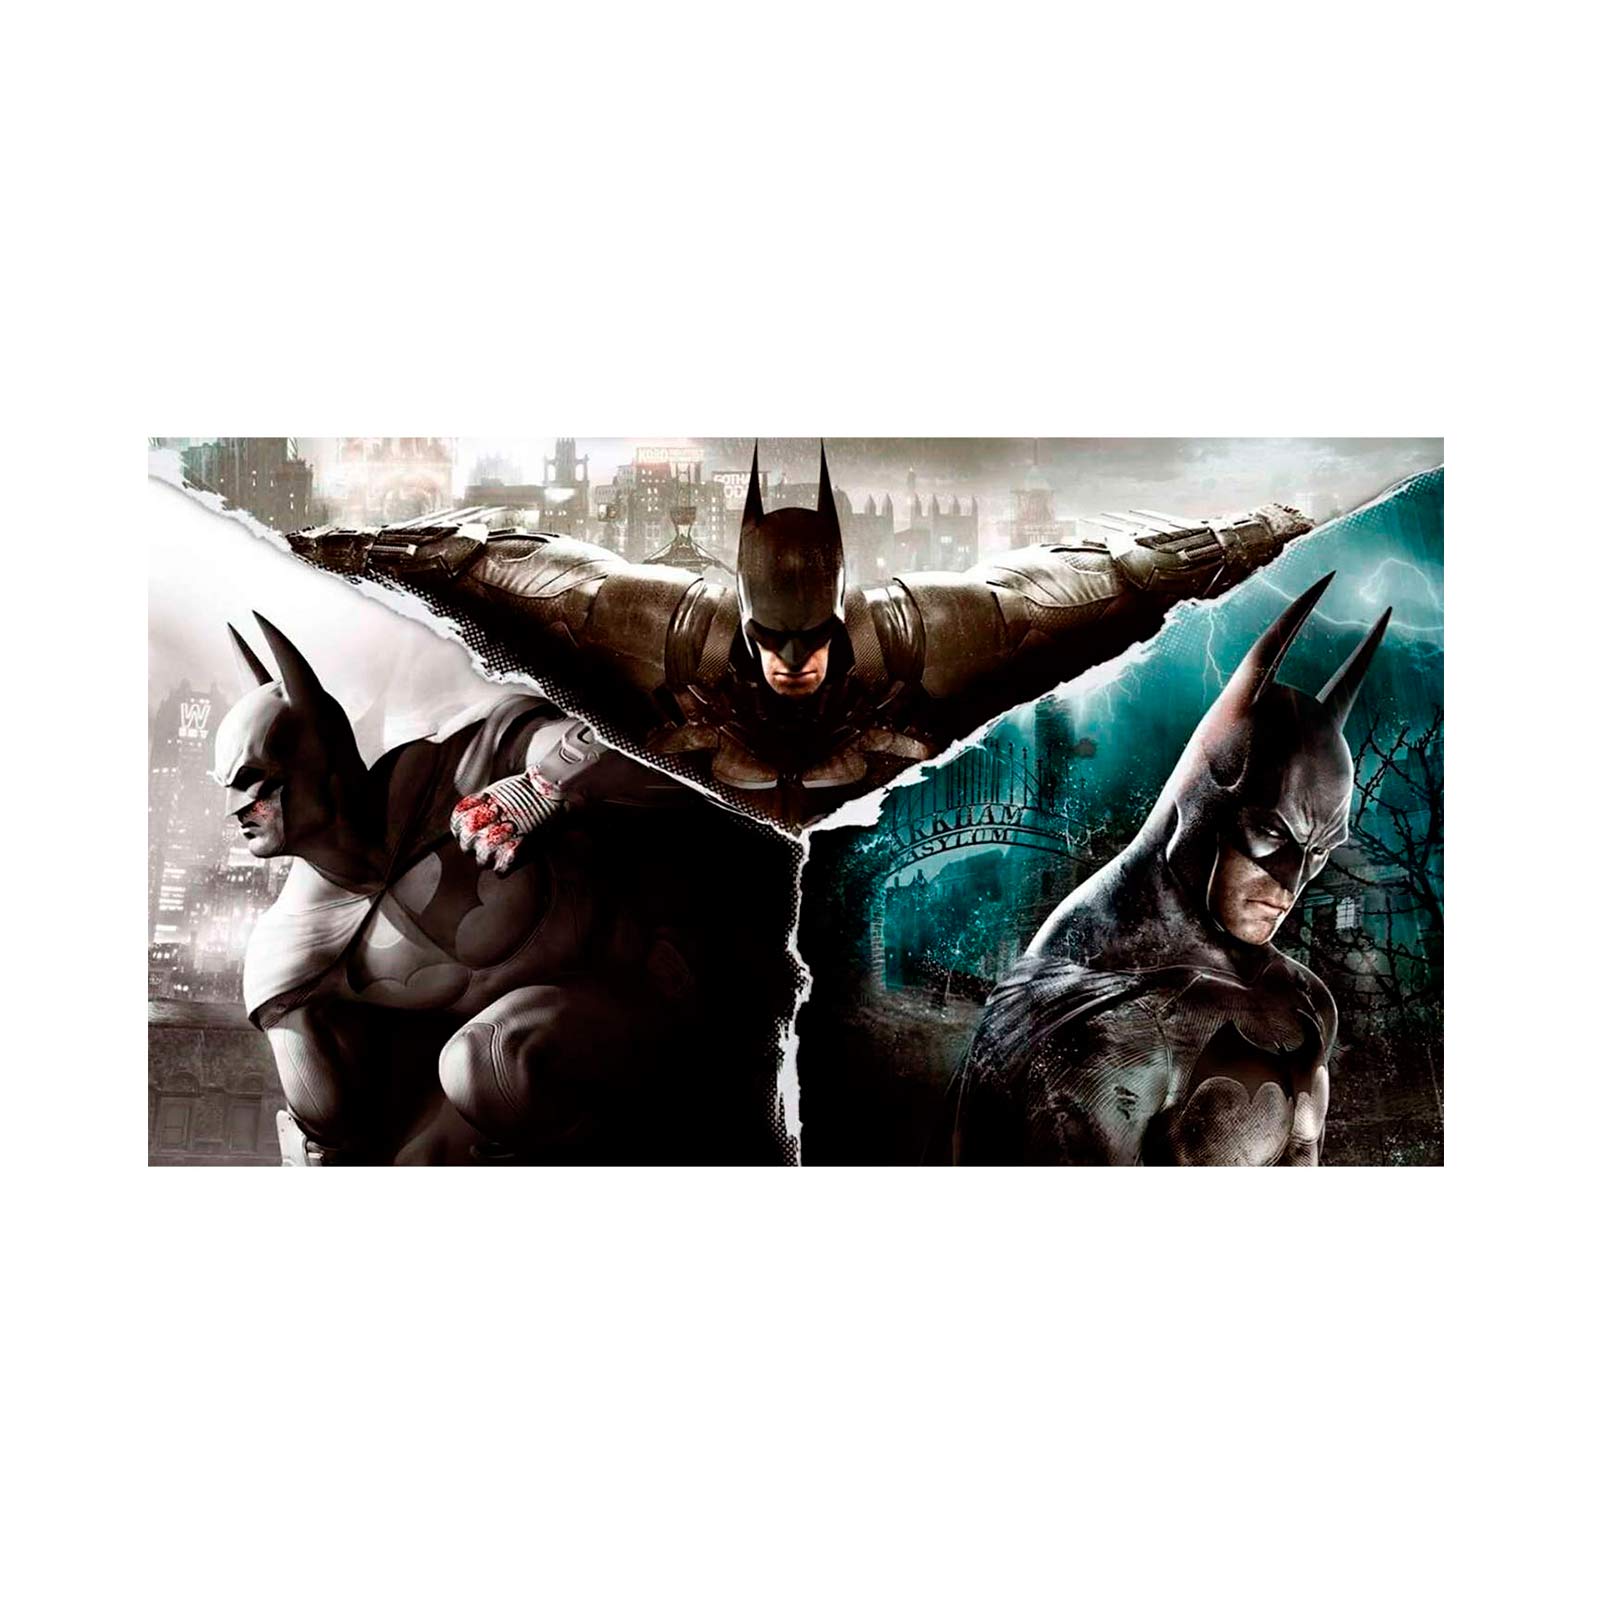 Juego Batman: Arkham Trilogy para Nintendo Switch